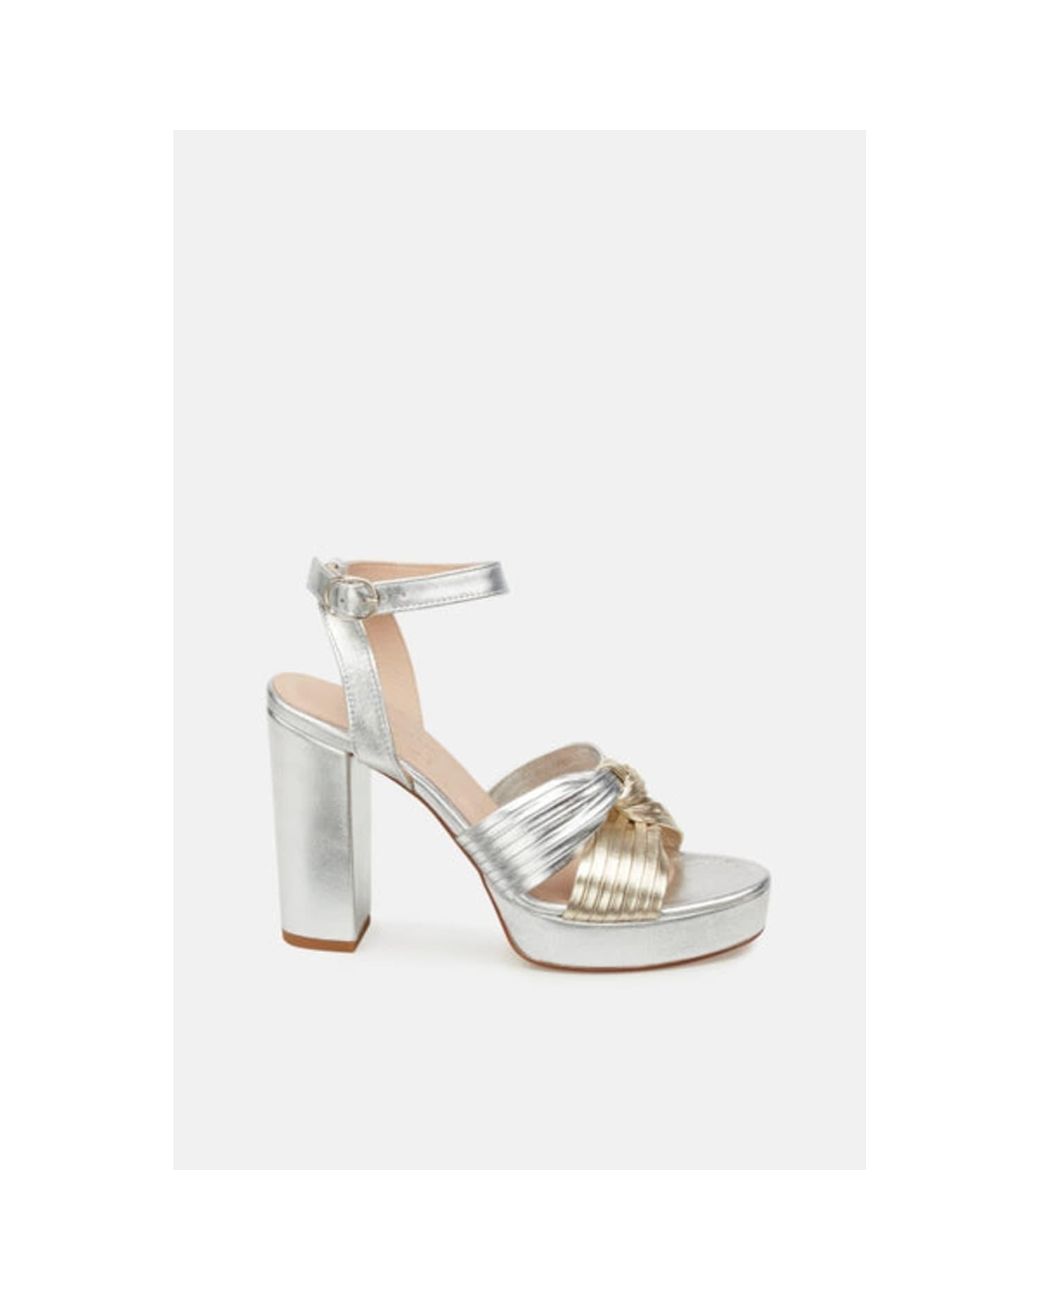 FABIENNE CHAPOT Nolita Knot Sandals Silver/gold in White | Lyst